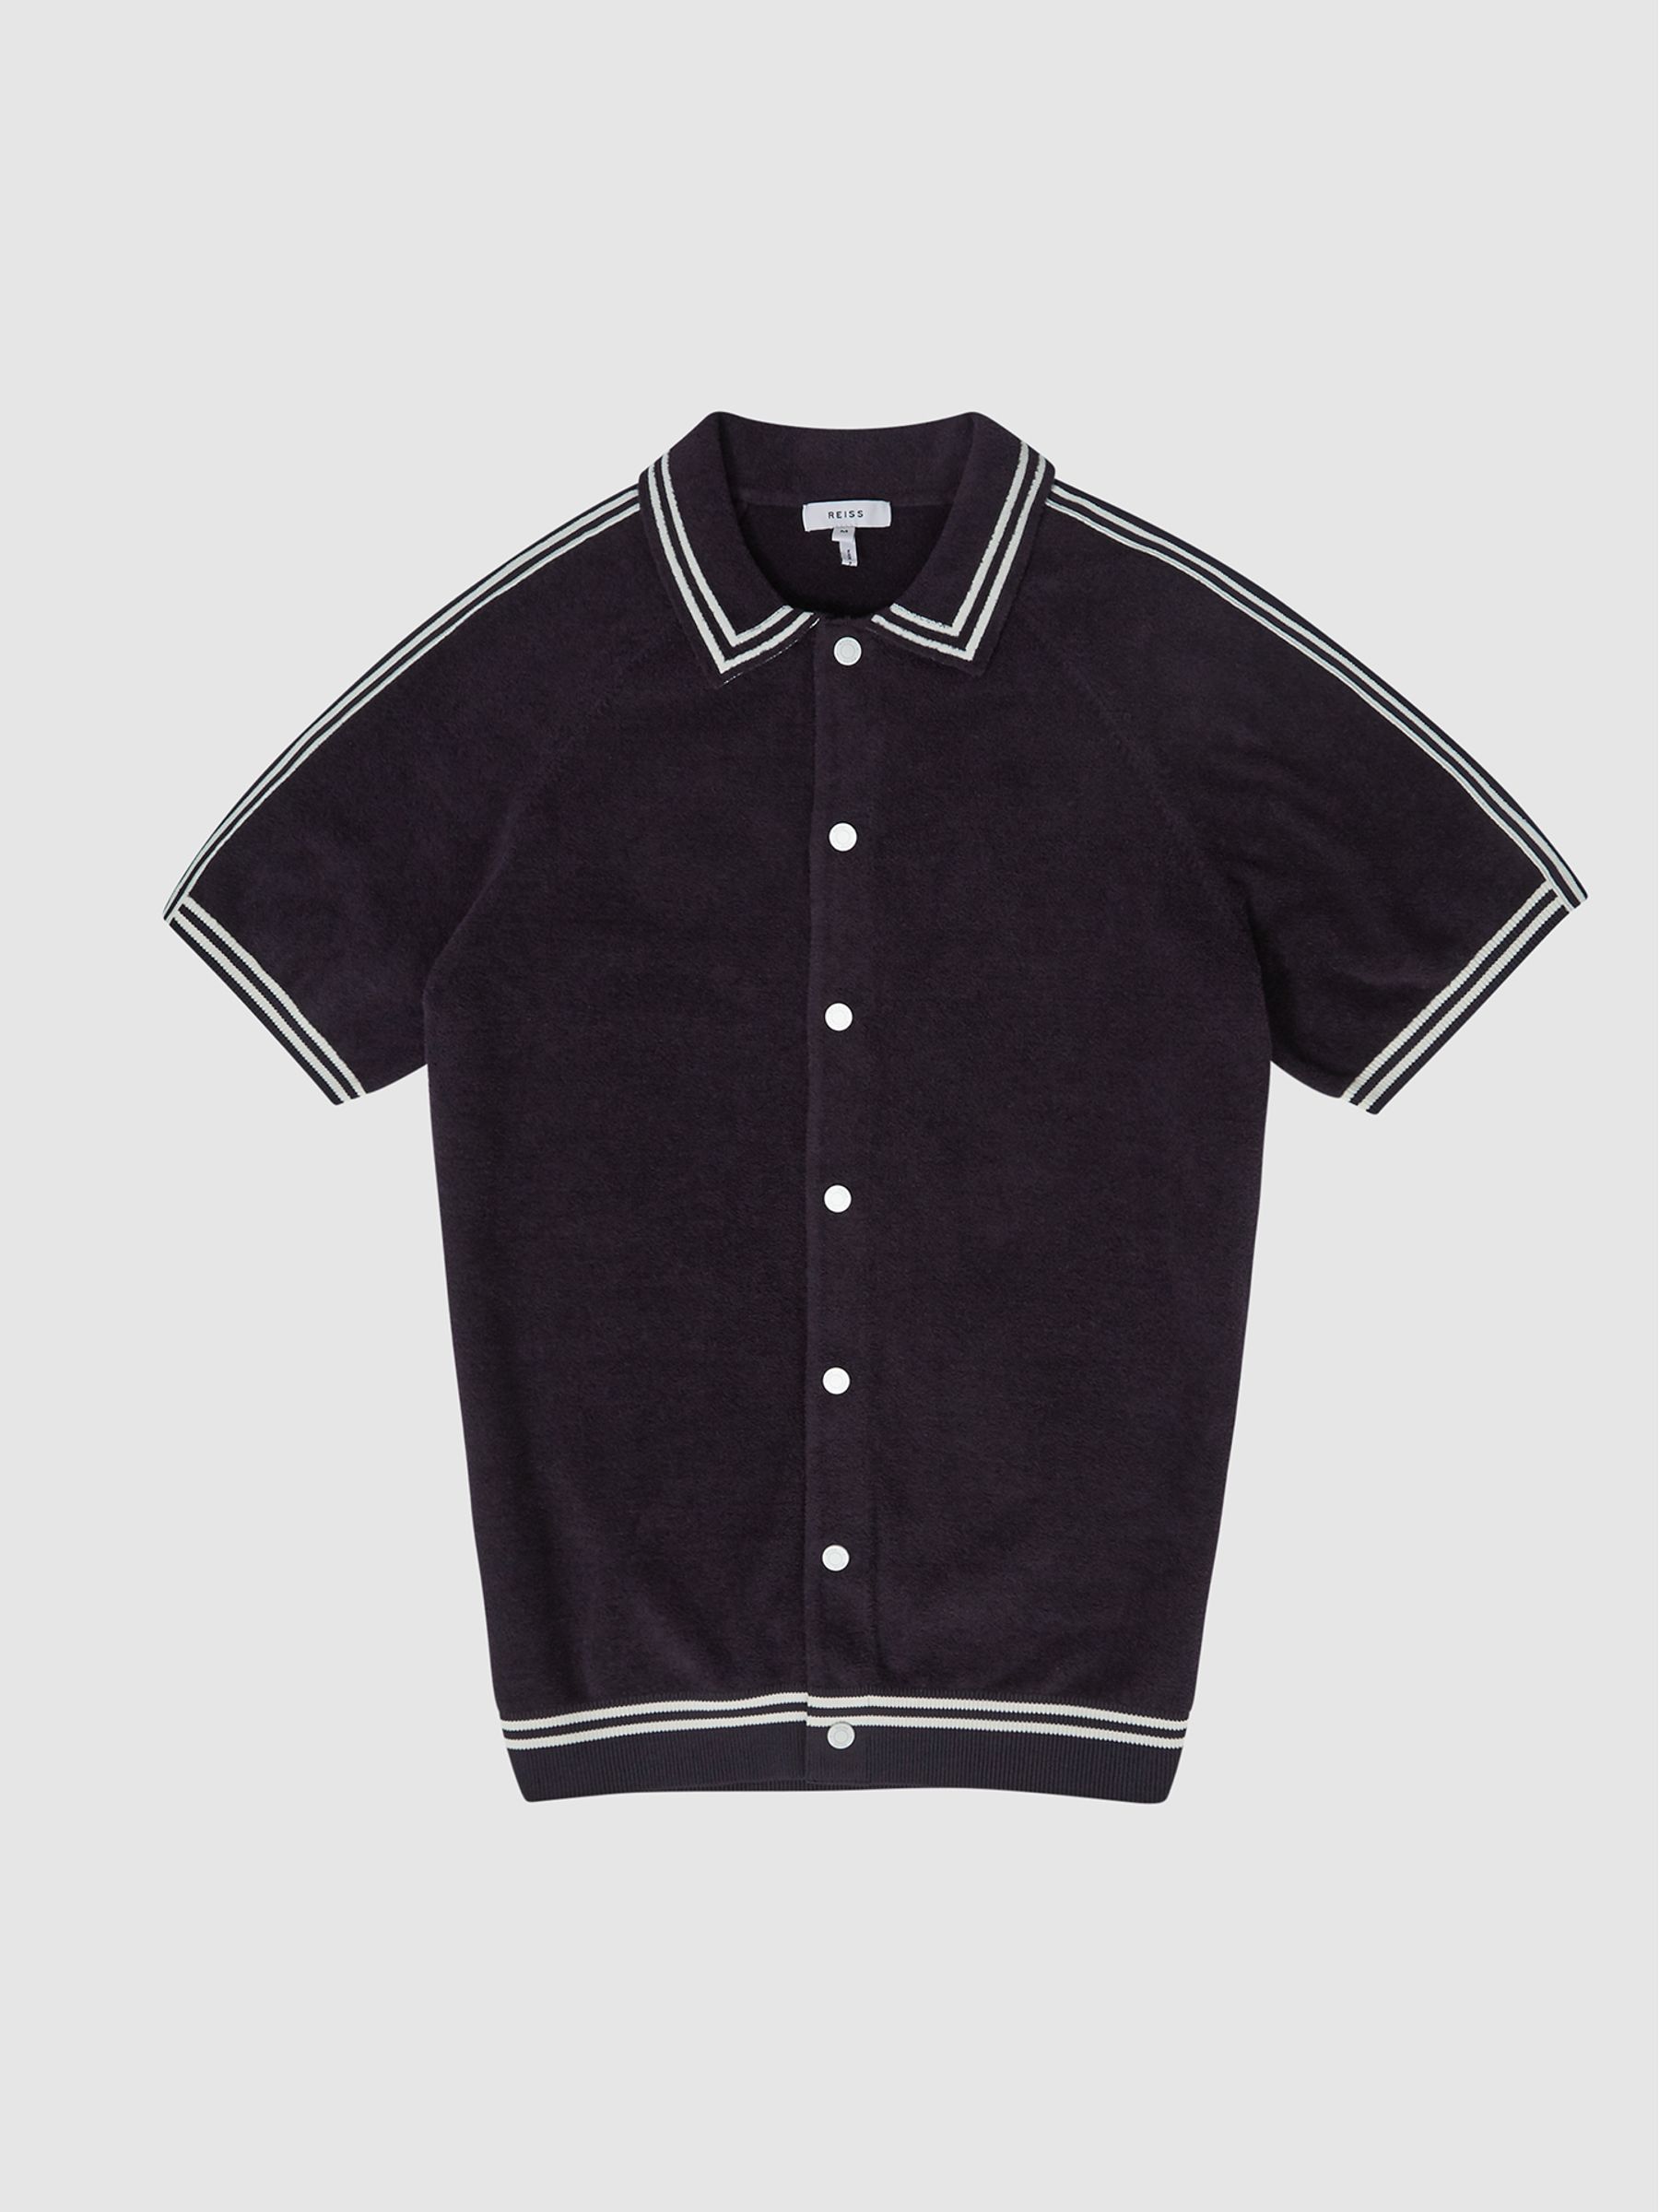 Reiss Porto Velour Side Stripe Shirt - REISS